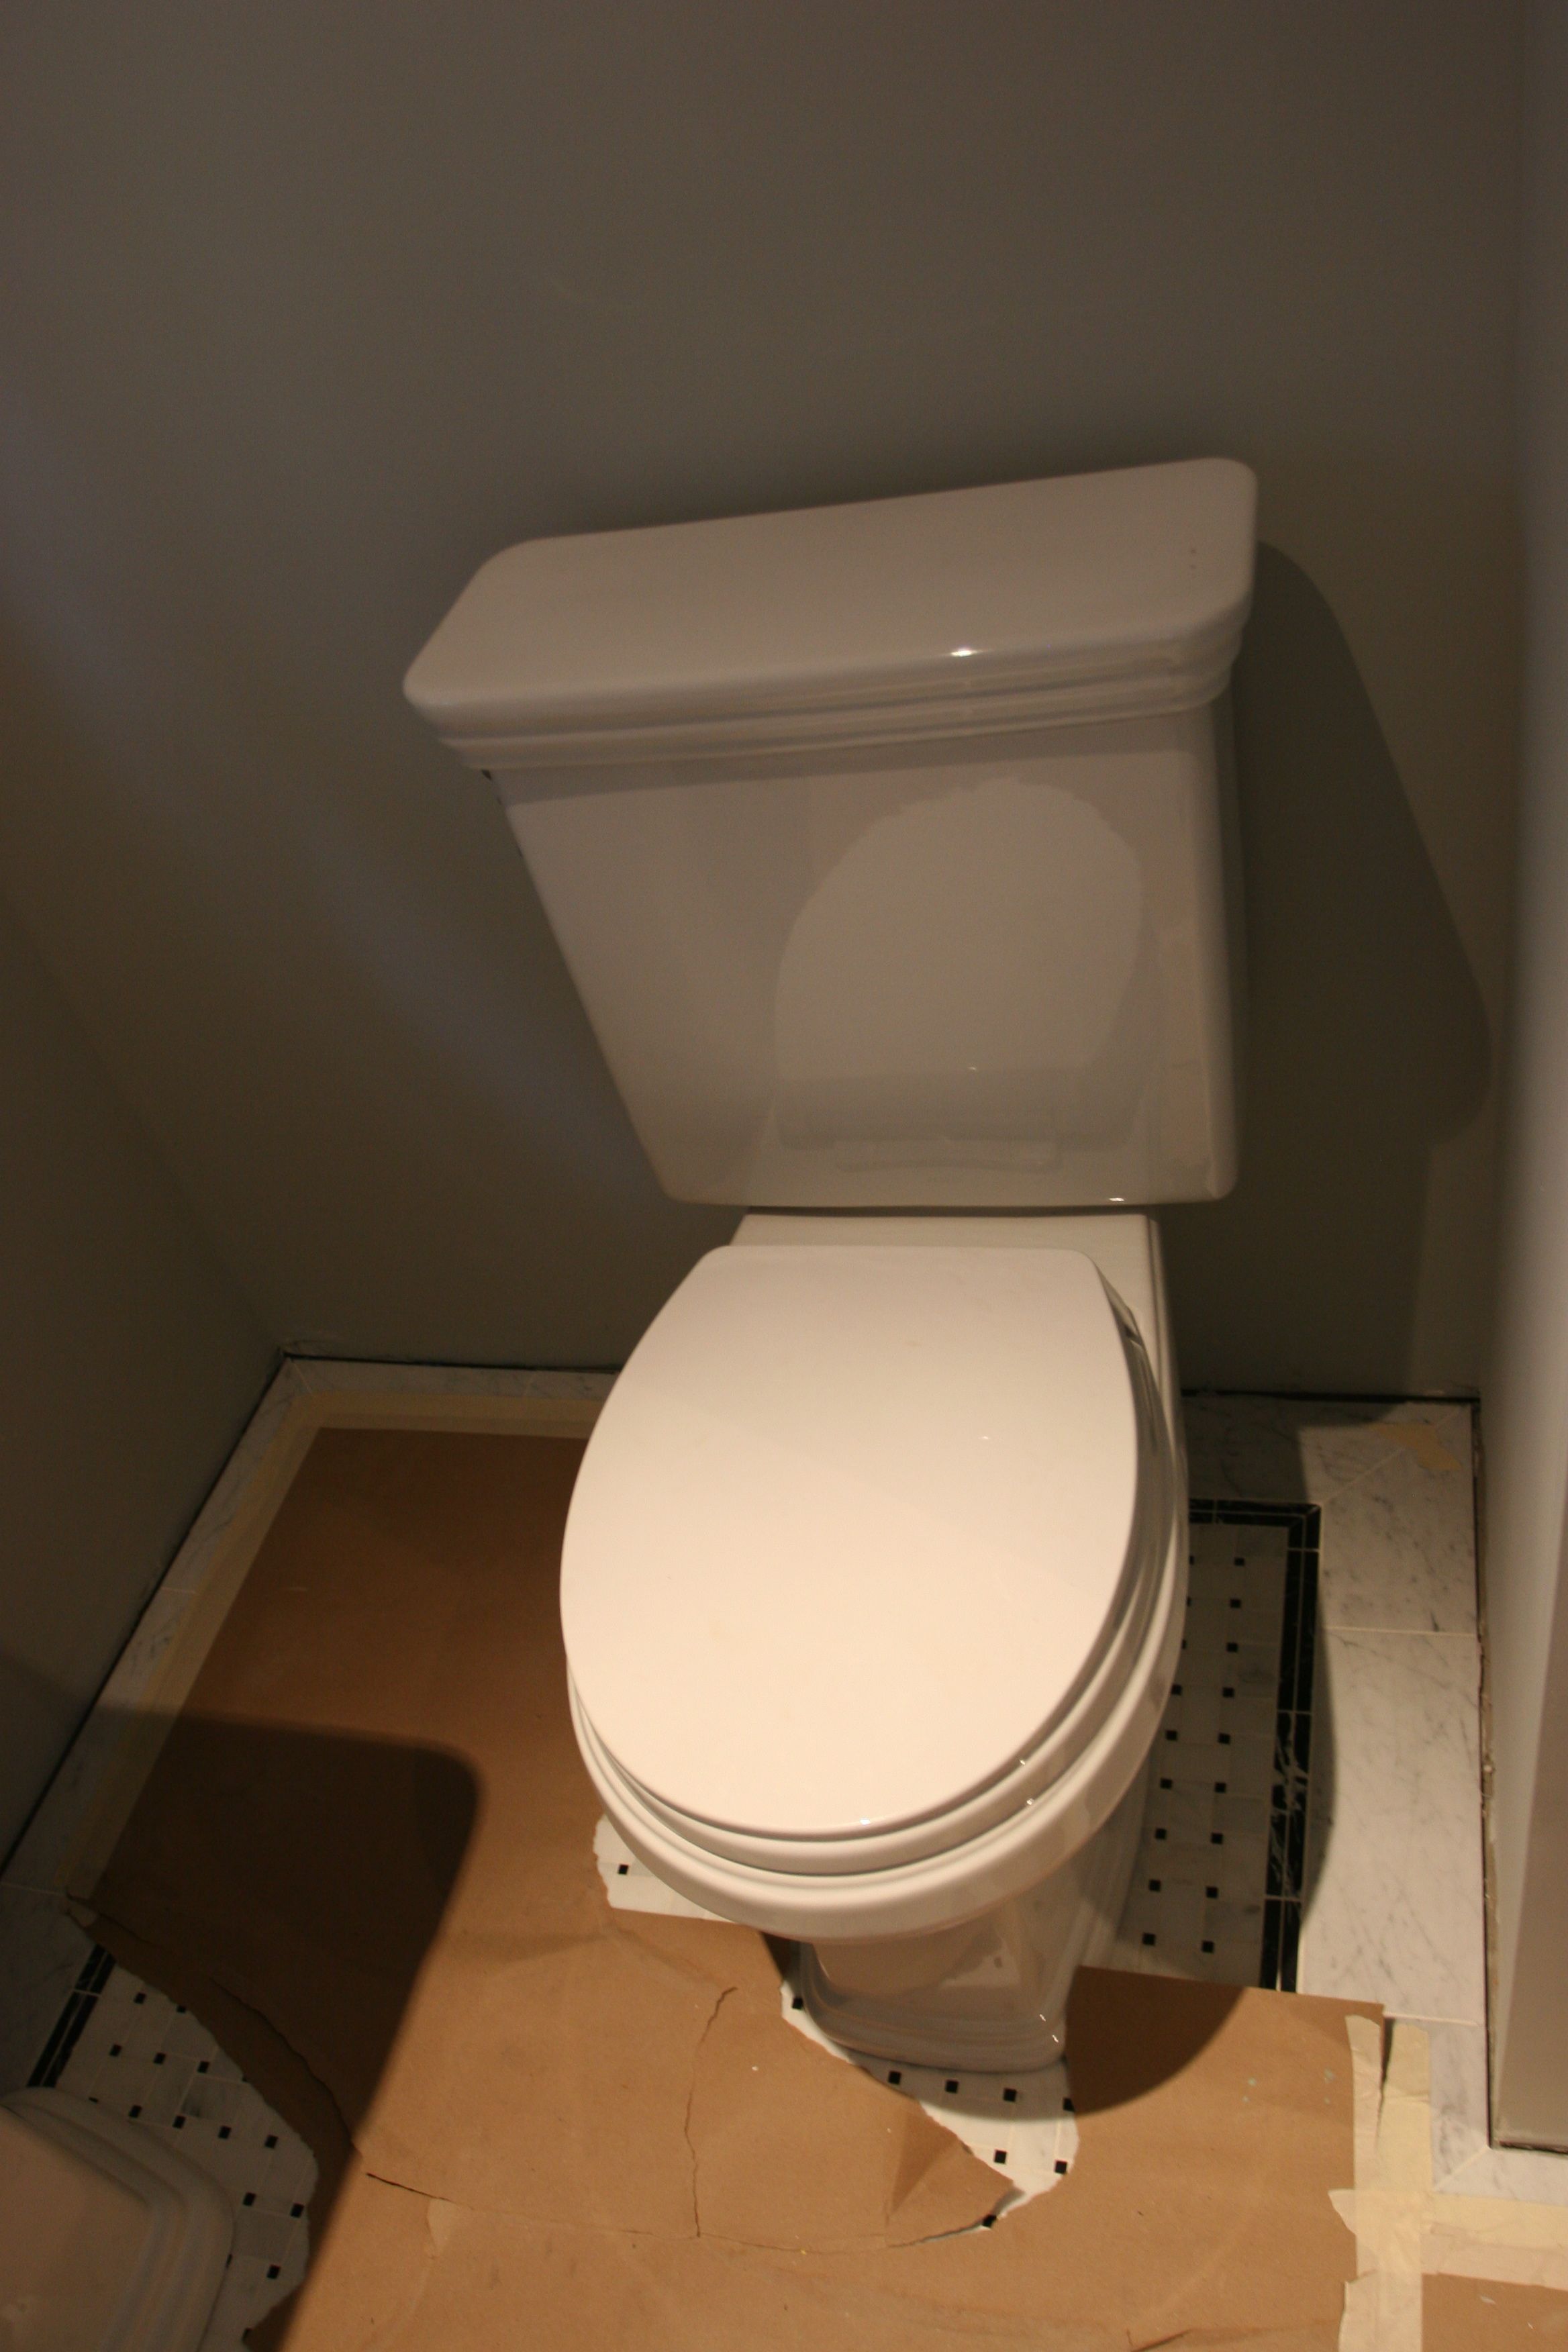 Powder room toilet! And it works, too! (Nice work, Matt!)